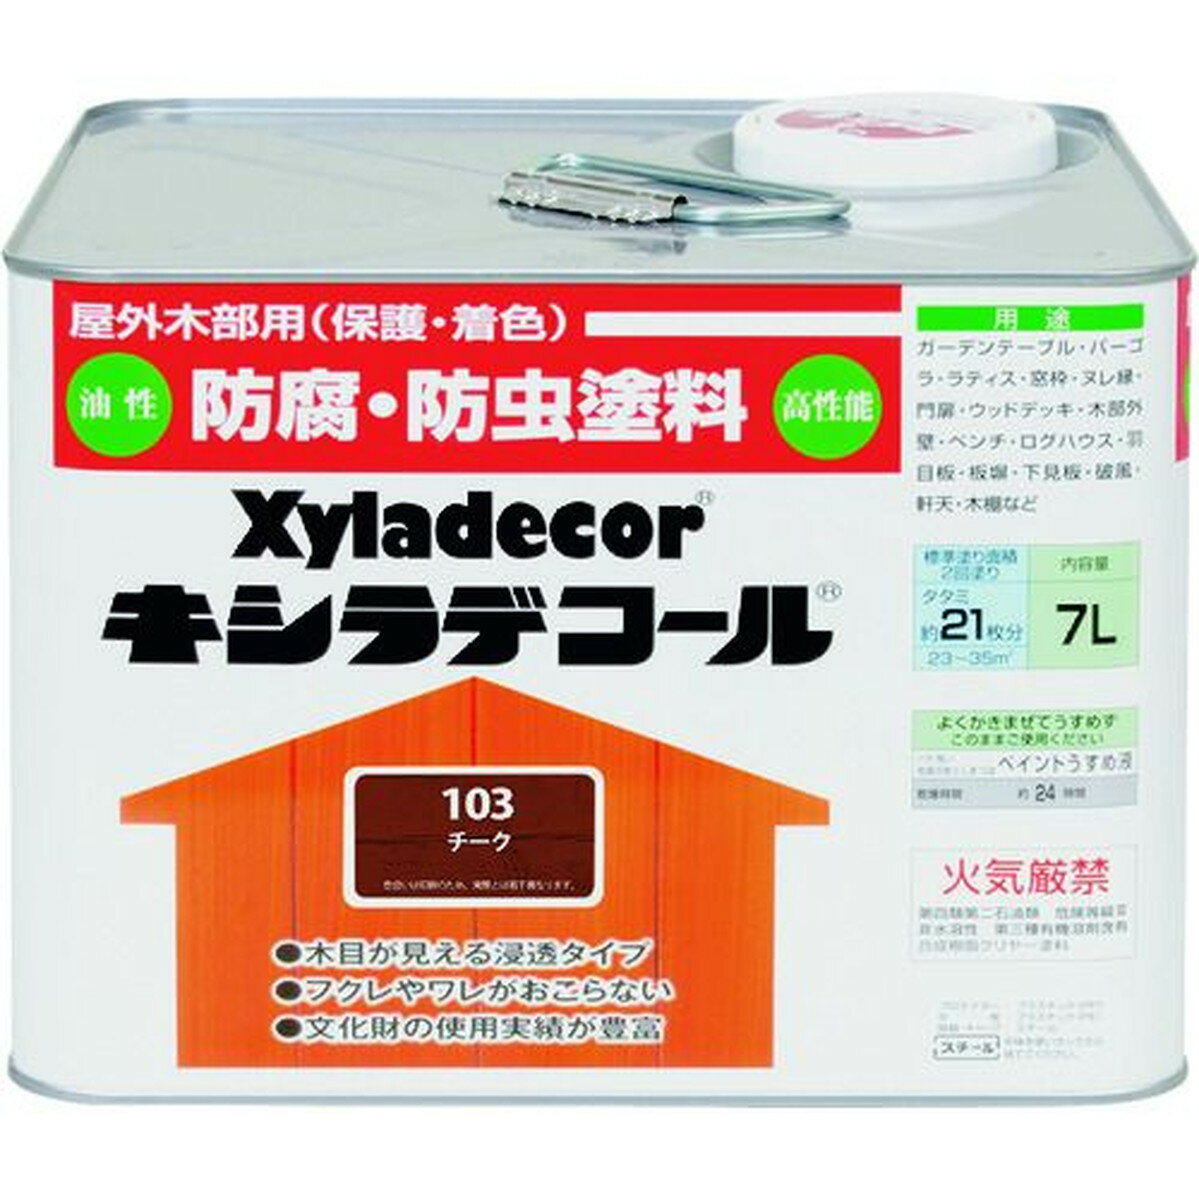 KANSAI キシラデコール チーク 7L 1缶 (00017670190000)